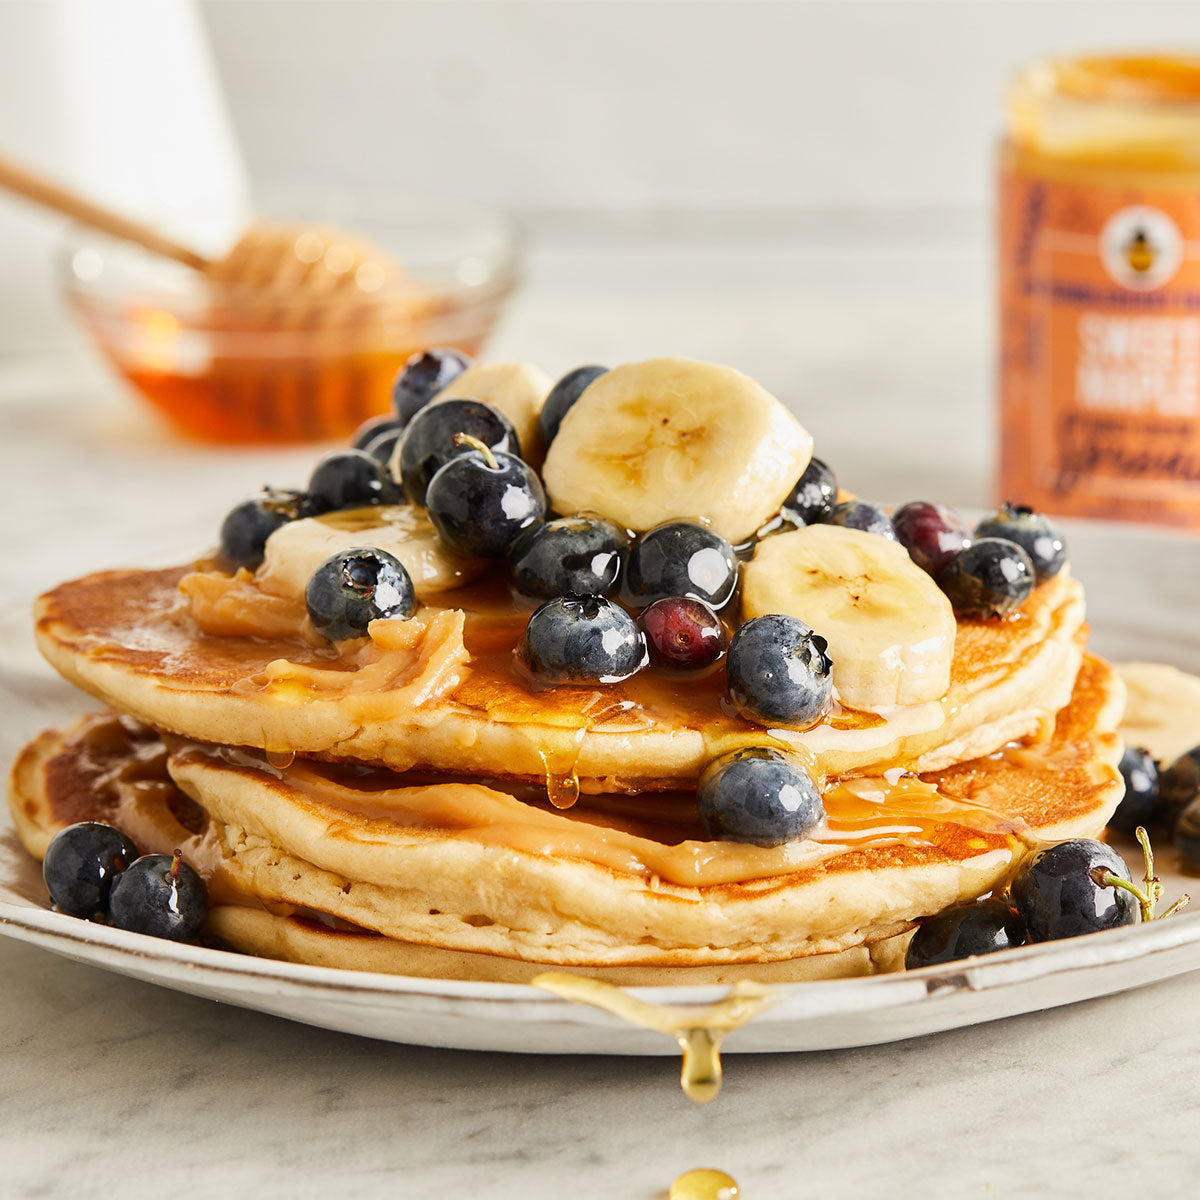 Blueberry Pancake + Waffle Mix